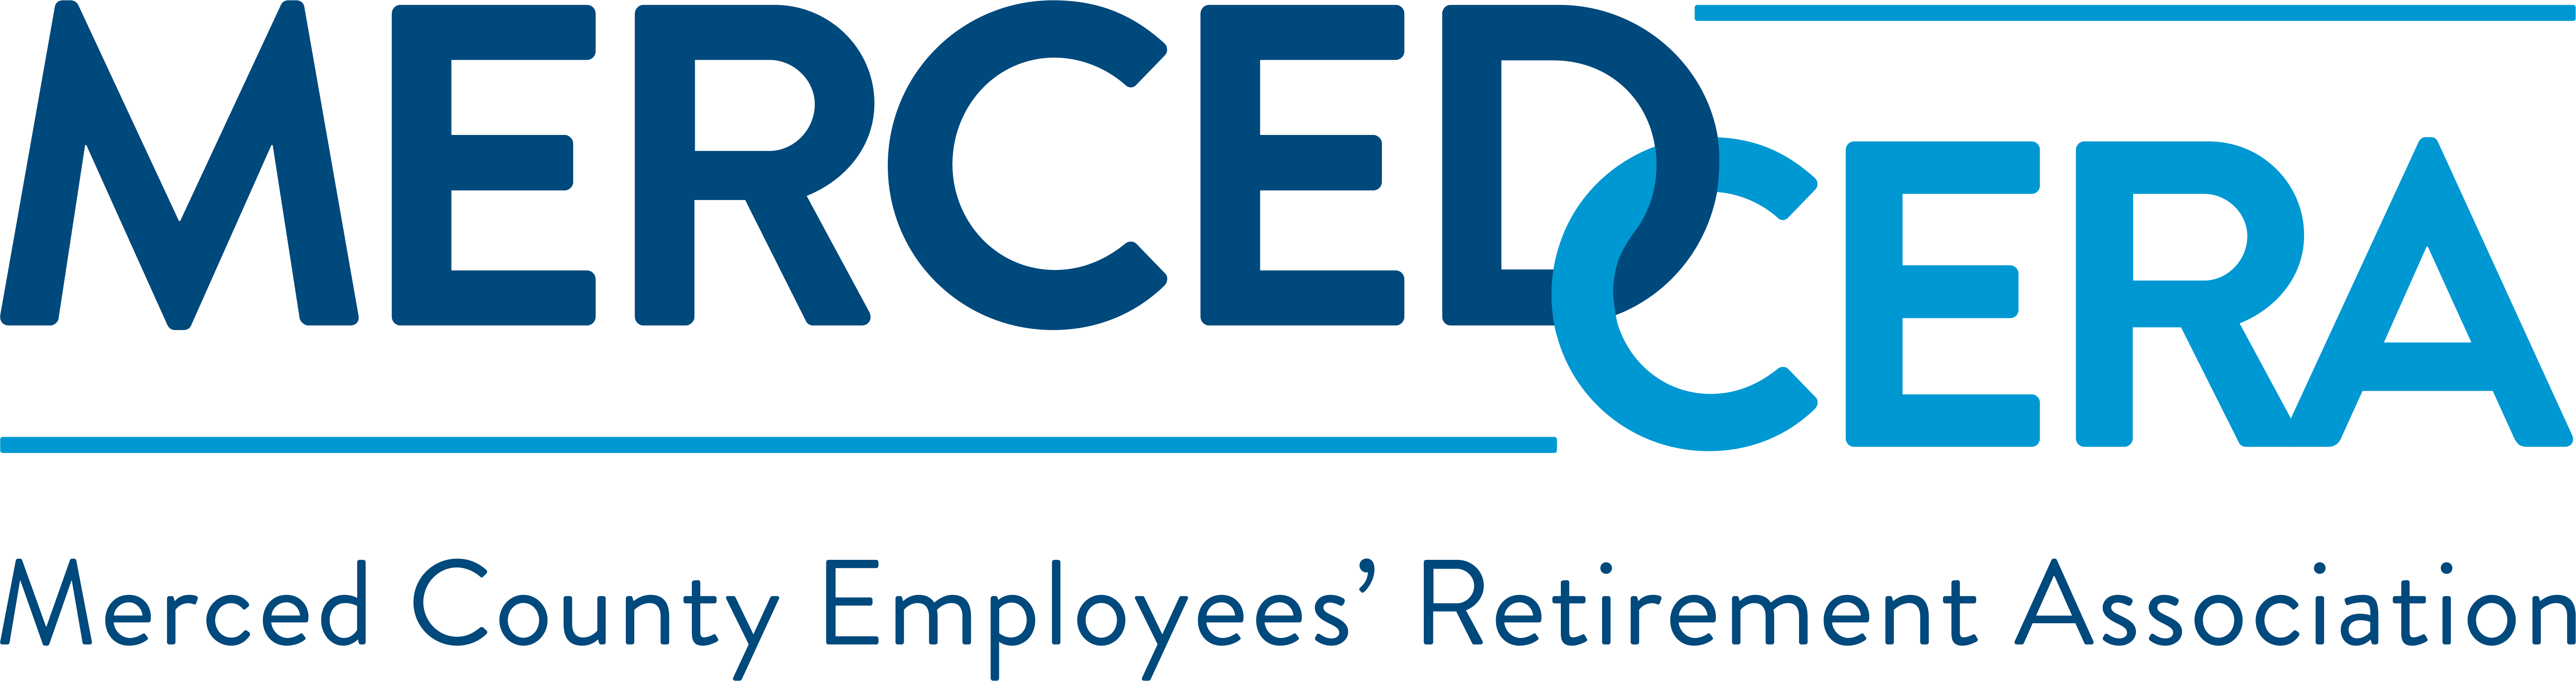 Merced County Employees Retirement Association